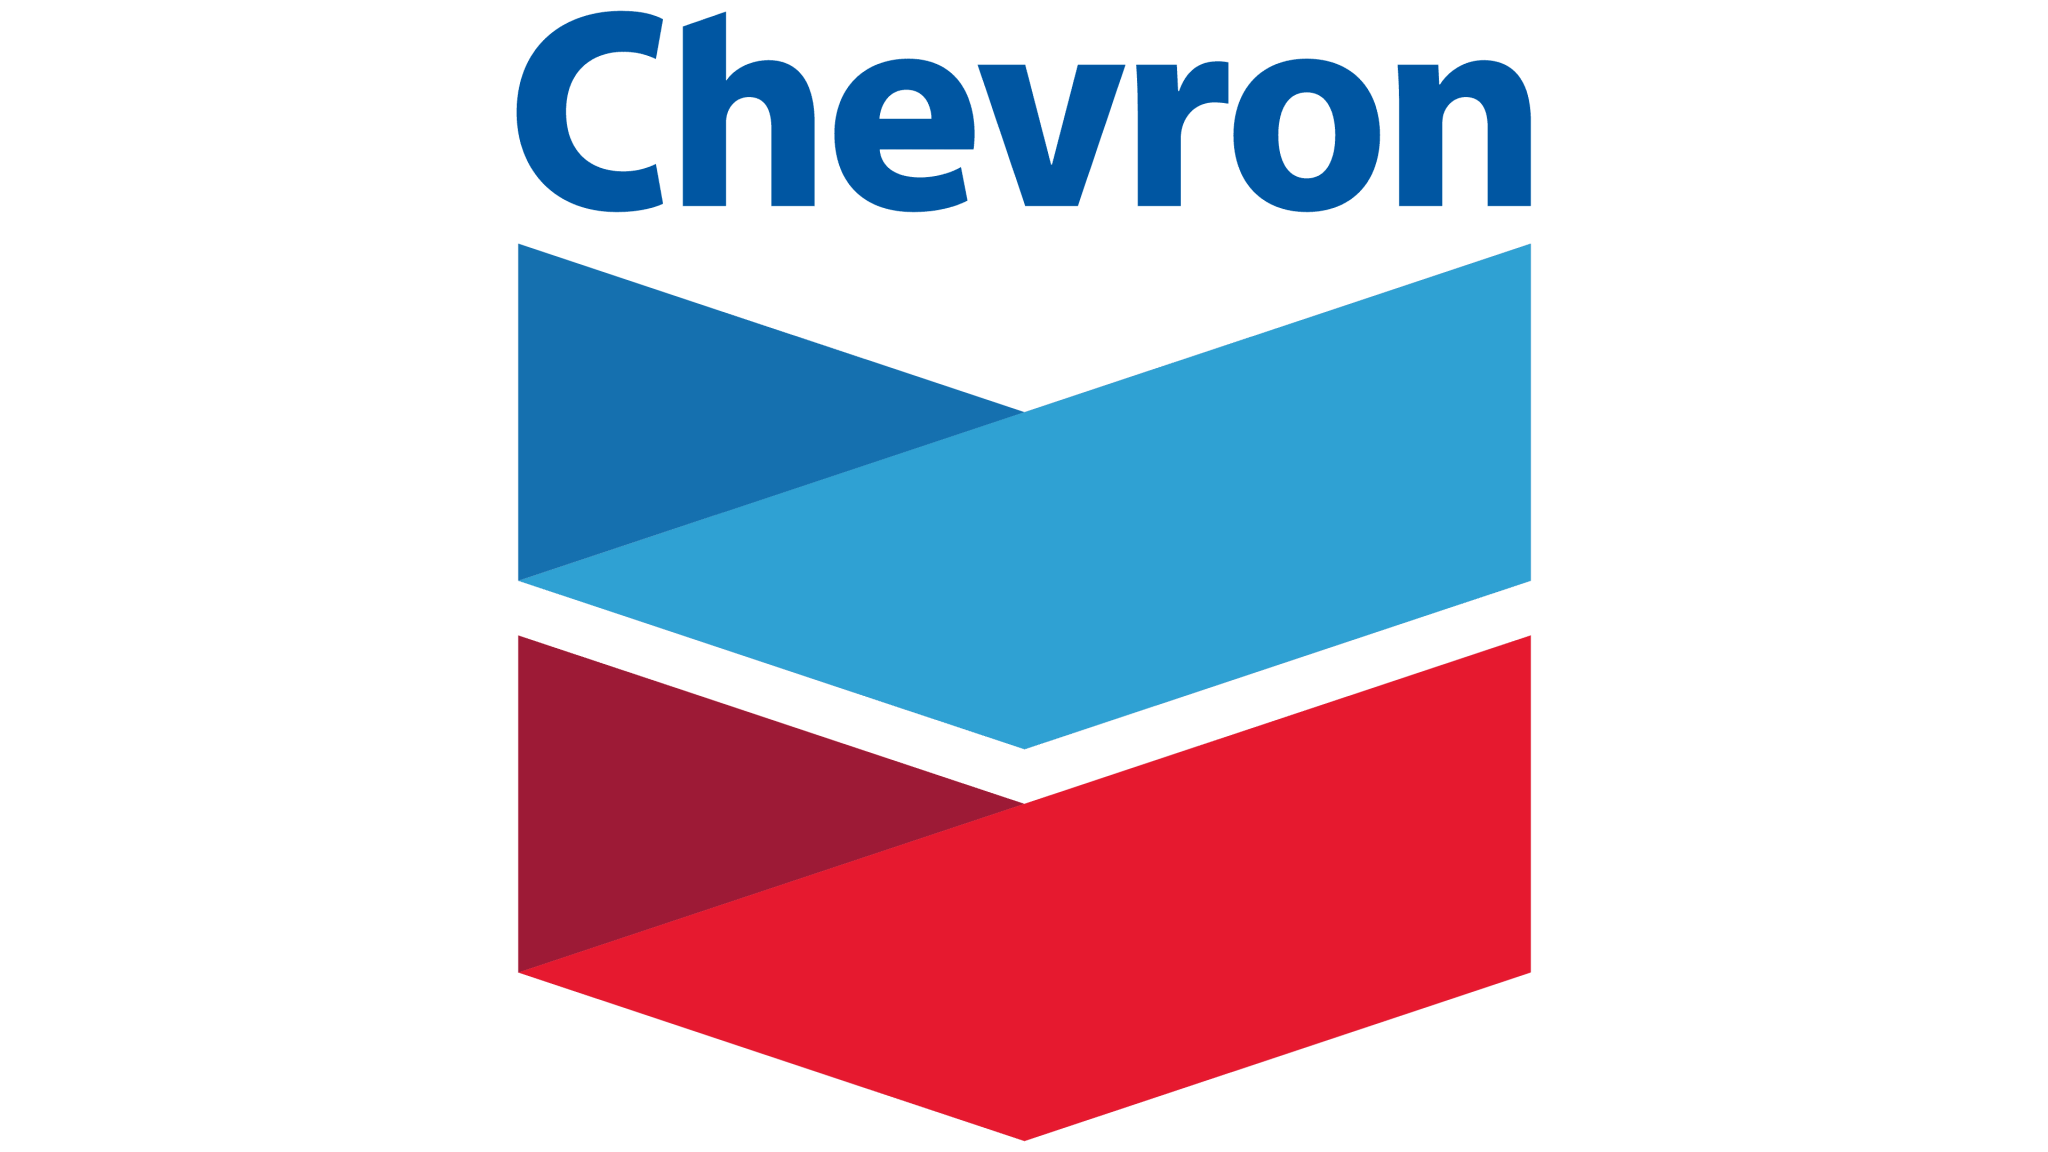 Chevron Steps Up Venezuelan Crude Oil Sales to US Refiners